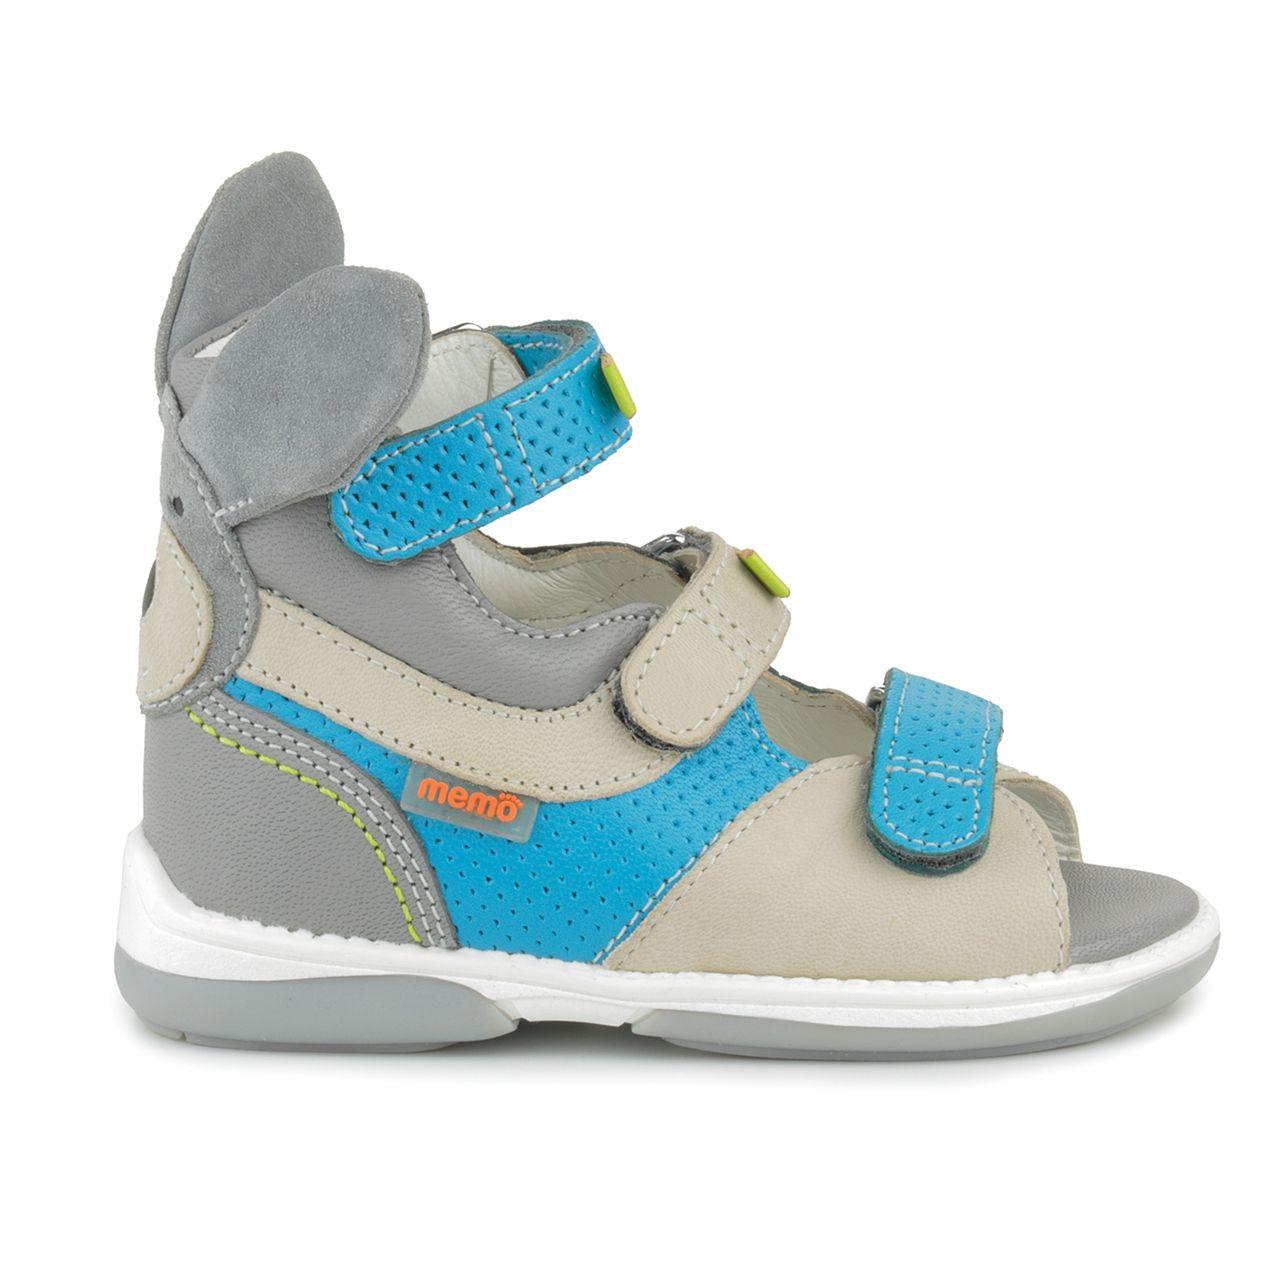 Shoes with Kangaroo Logo - Memo Shoes. Memo Kangaroo 3CH Gray Blue Sandals